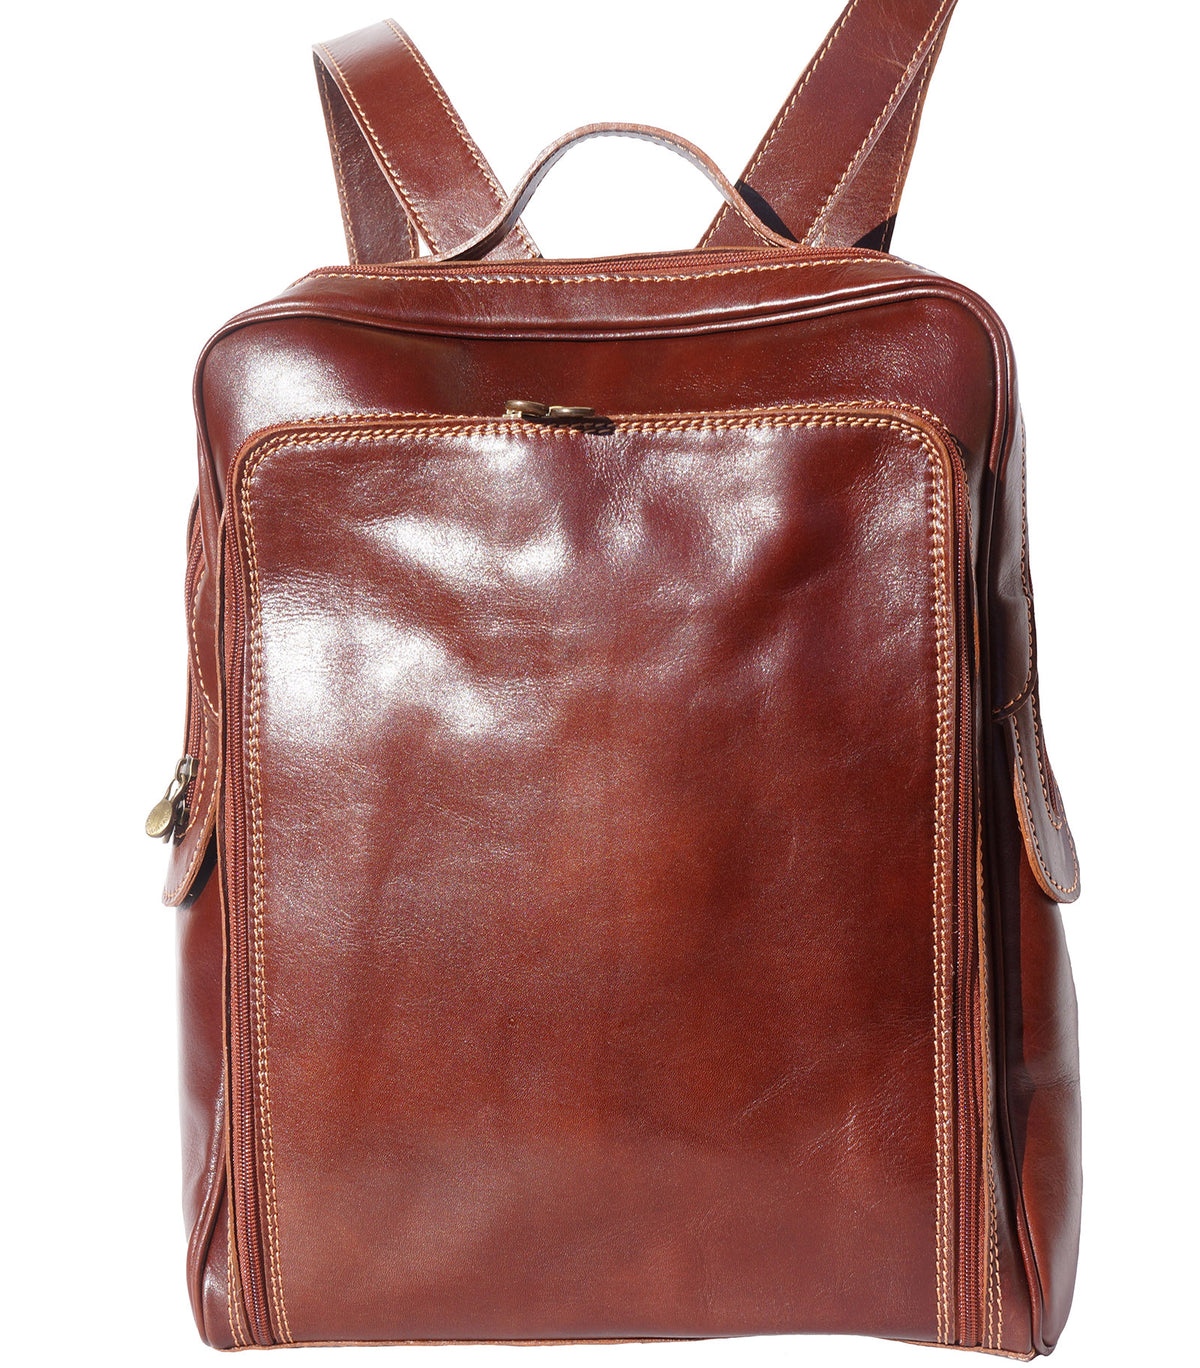 Gabriele GM leather backpack-33